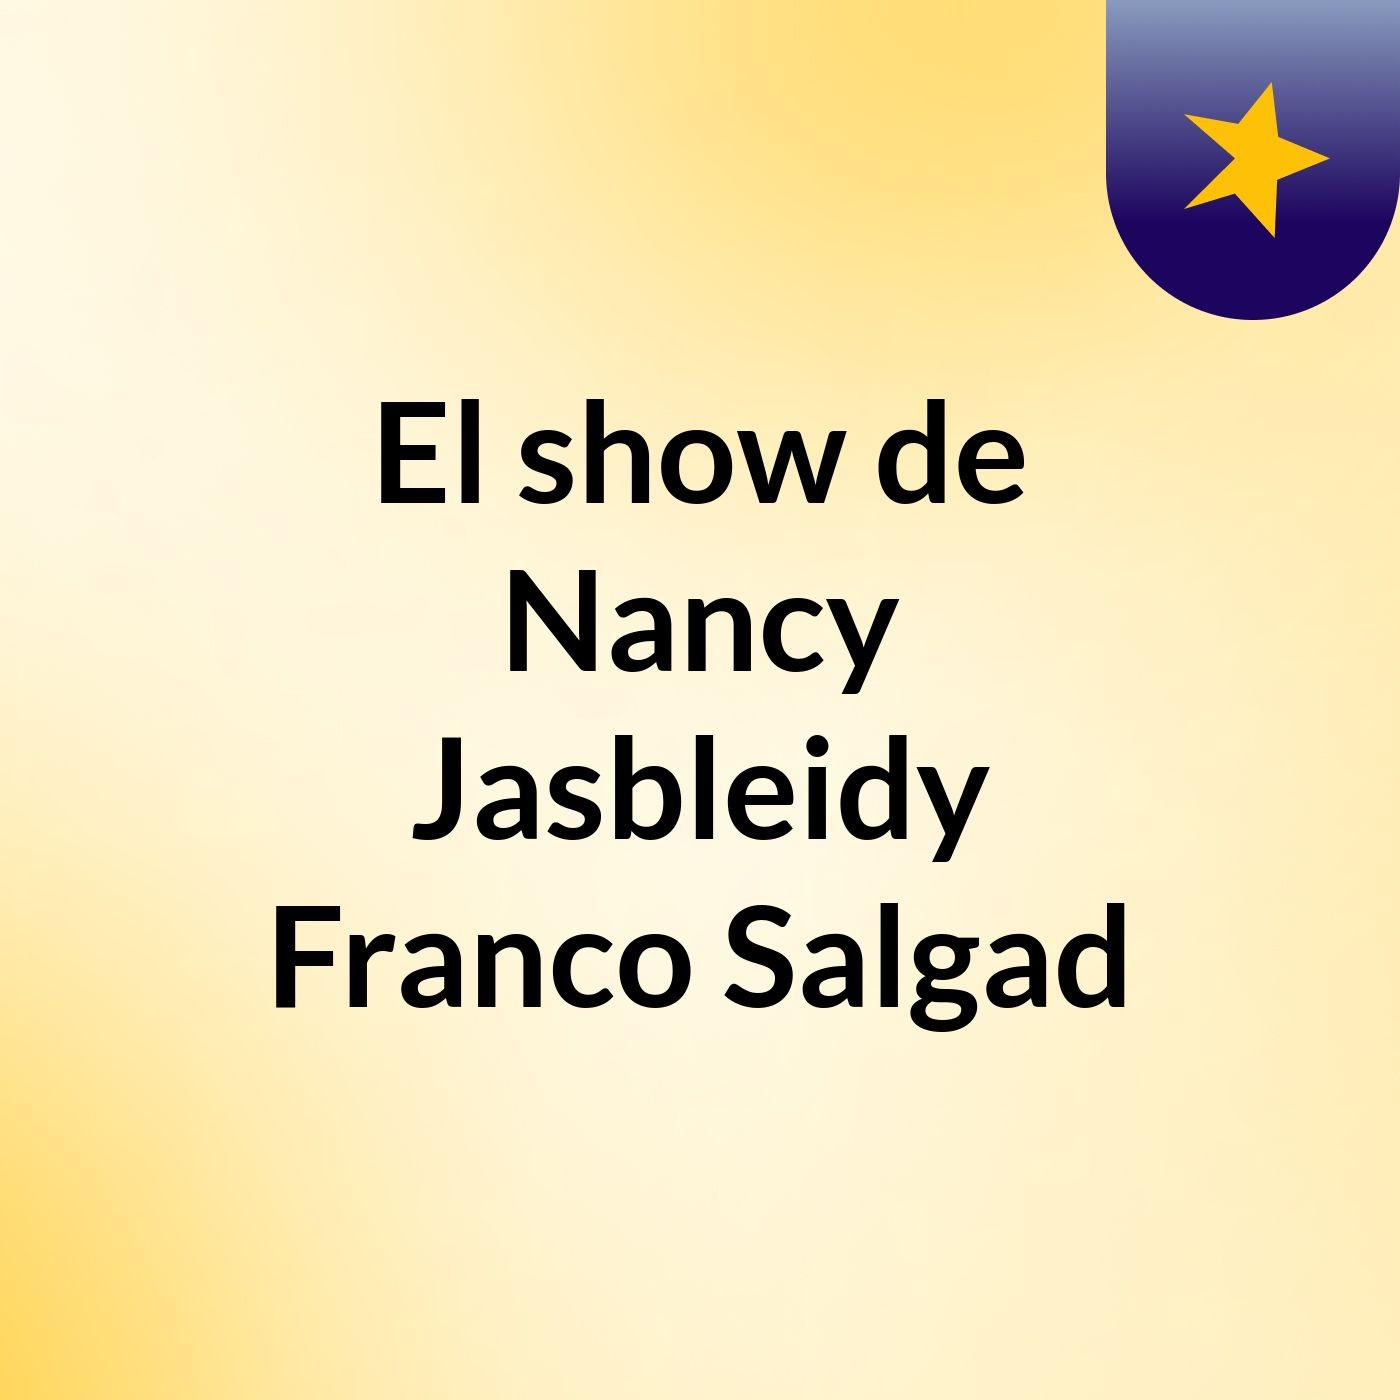 El show de Nancy Jasbleidy Franco Salgad